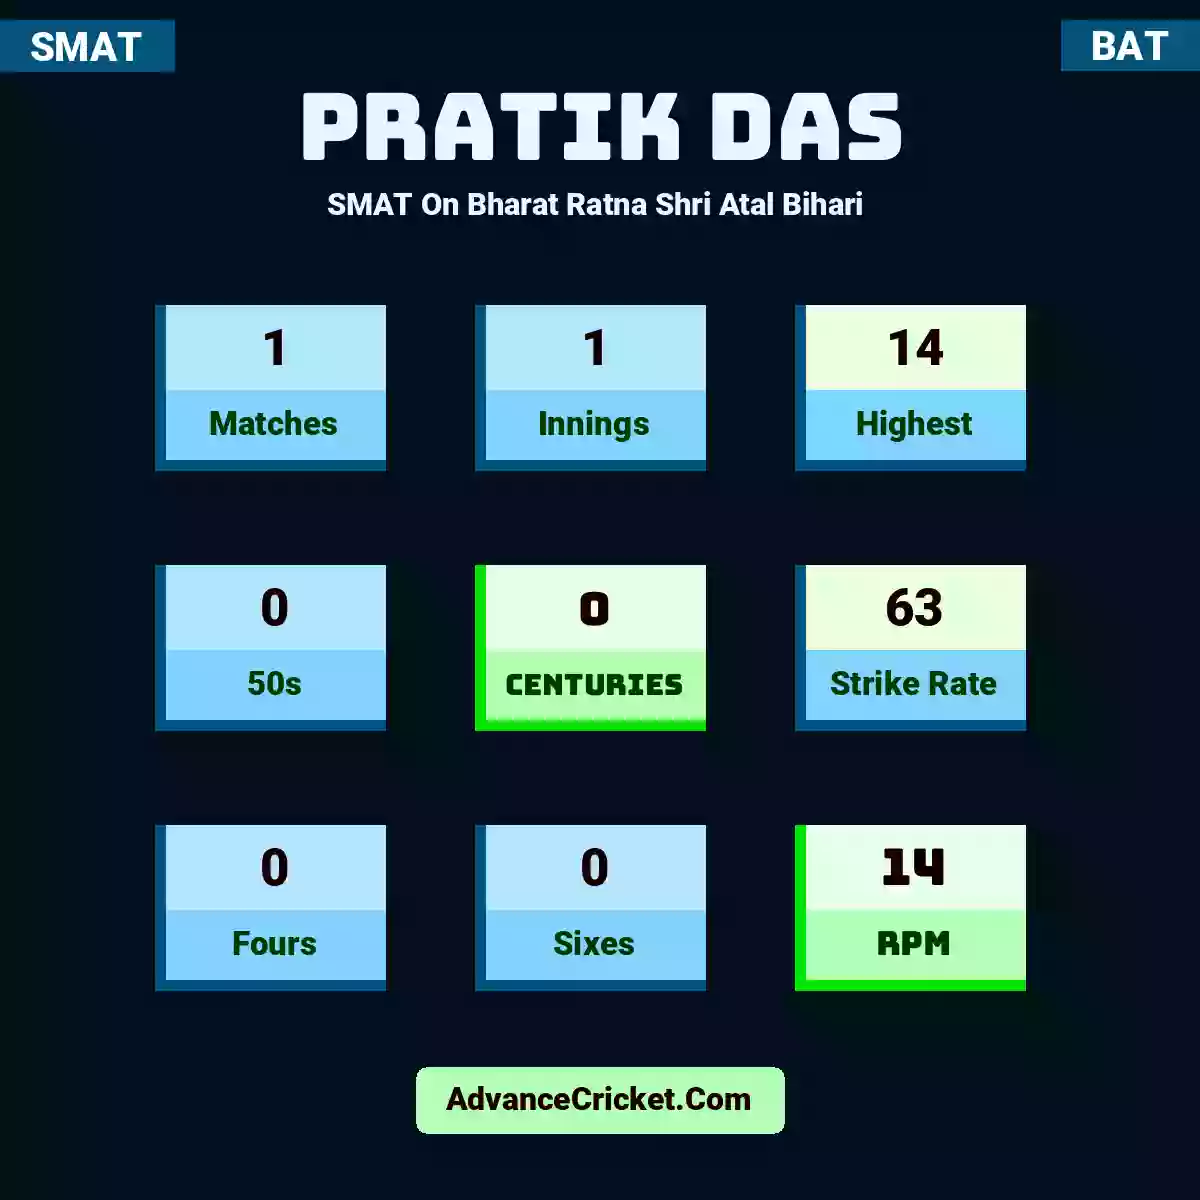 Pratik Das SMAT  On Bharat Ratna Shri Atal Bihari , Pratik Das played 1 matches, scored 14 runs as highest, 0 half-centuries, and 0 centuries, with a strike rate of 63. P.Das hit 0 fours and 0 sixes, with an RPM of 14.